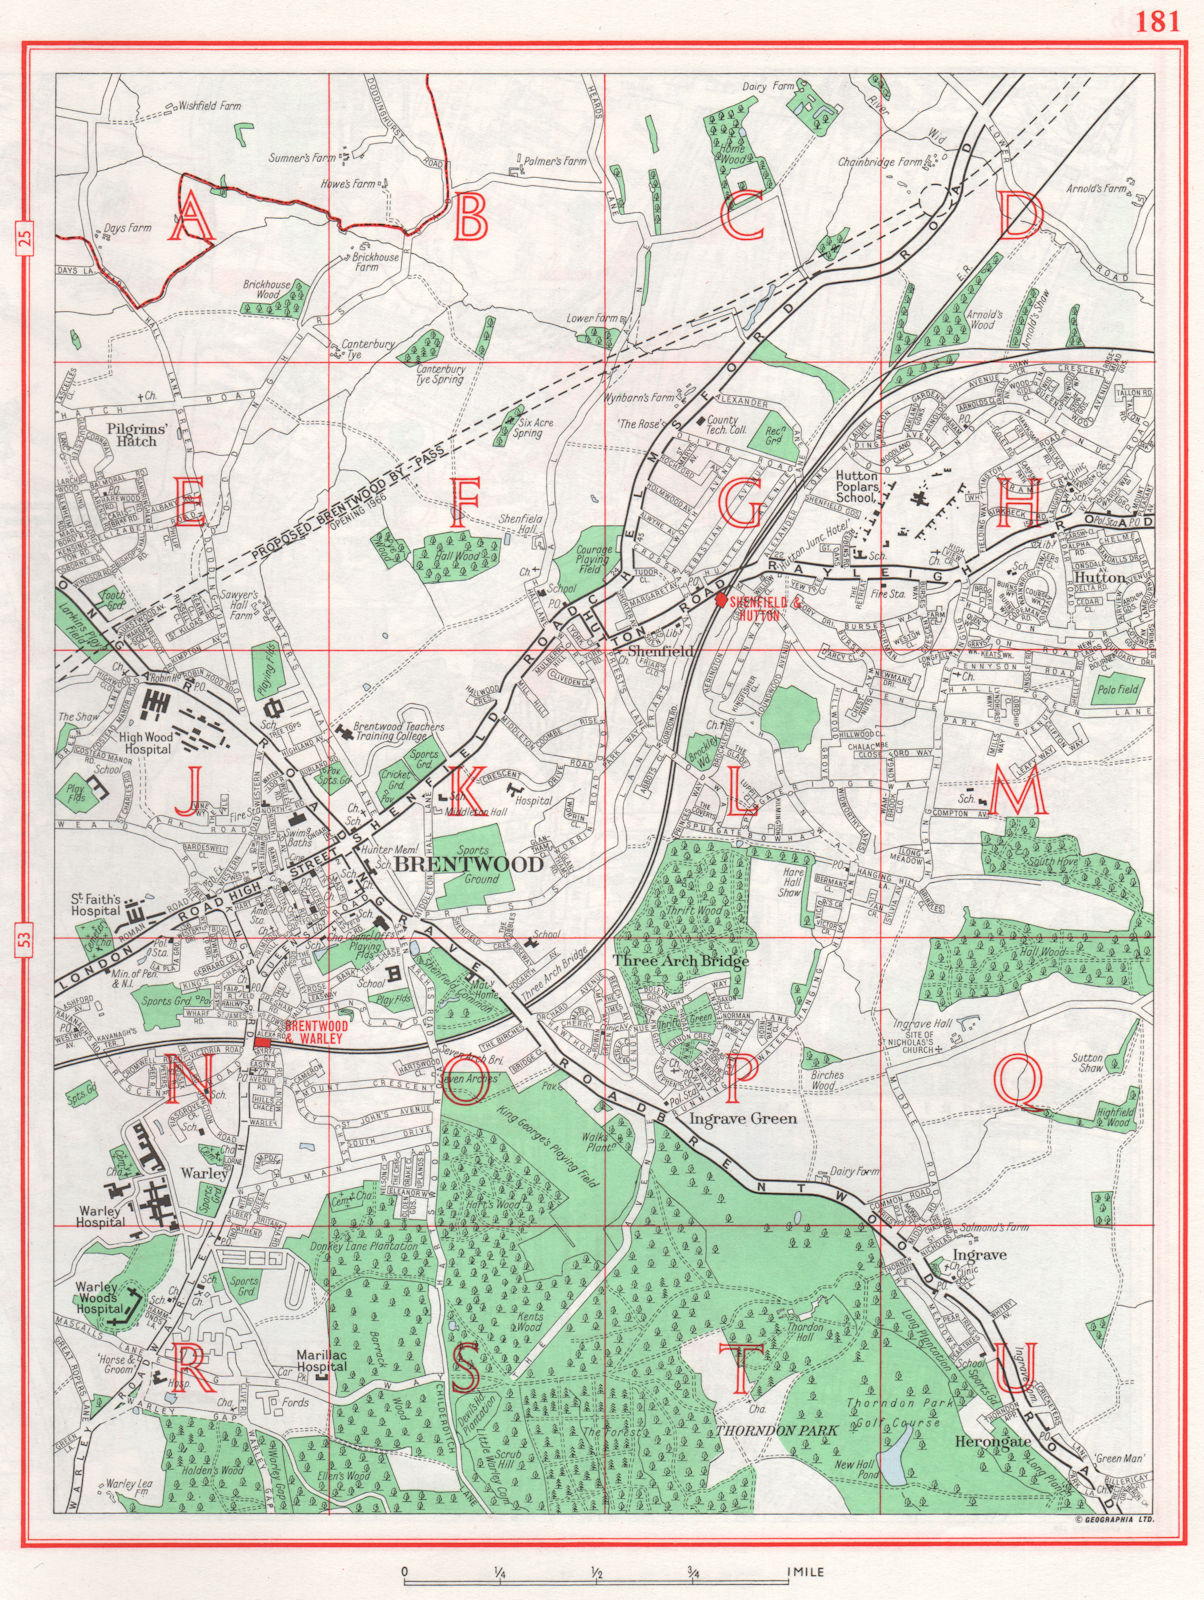 BRENTWOOD. Shenfield Hutton Warley Pilgrims Hatch Ingrave Green. Essex 1964 map